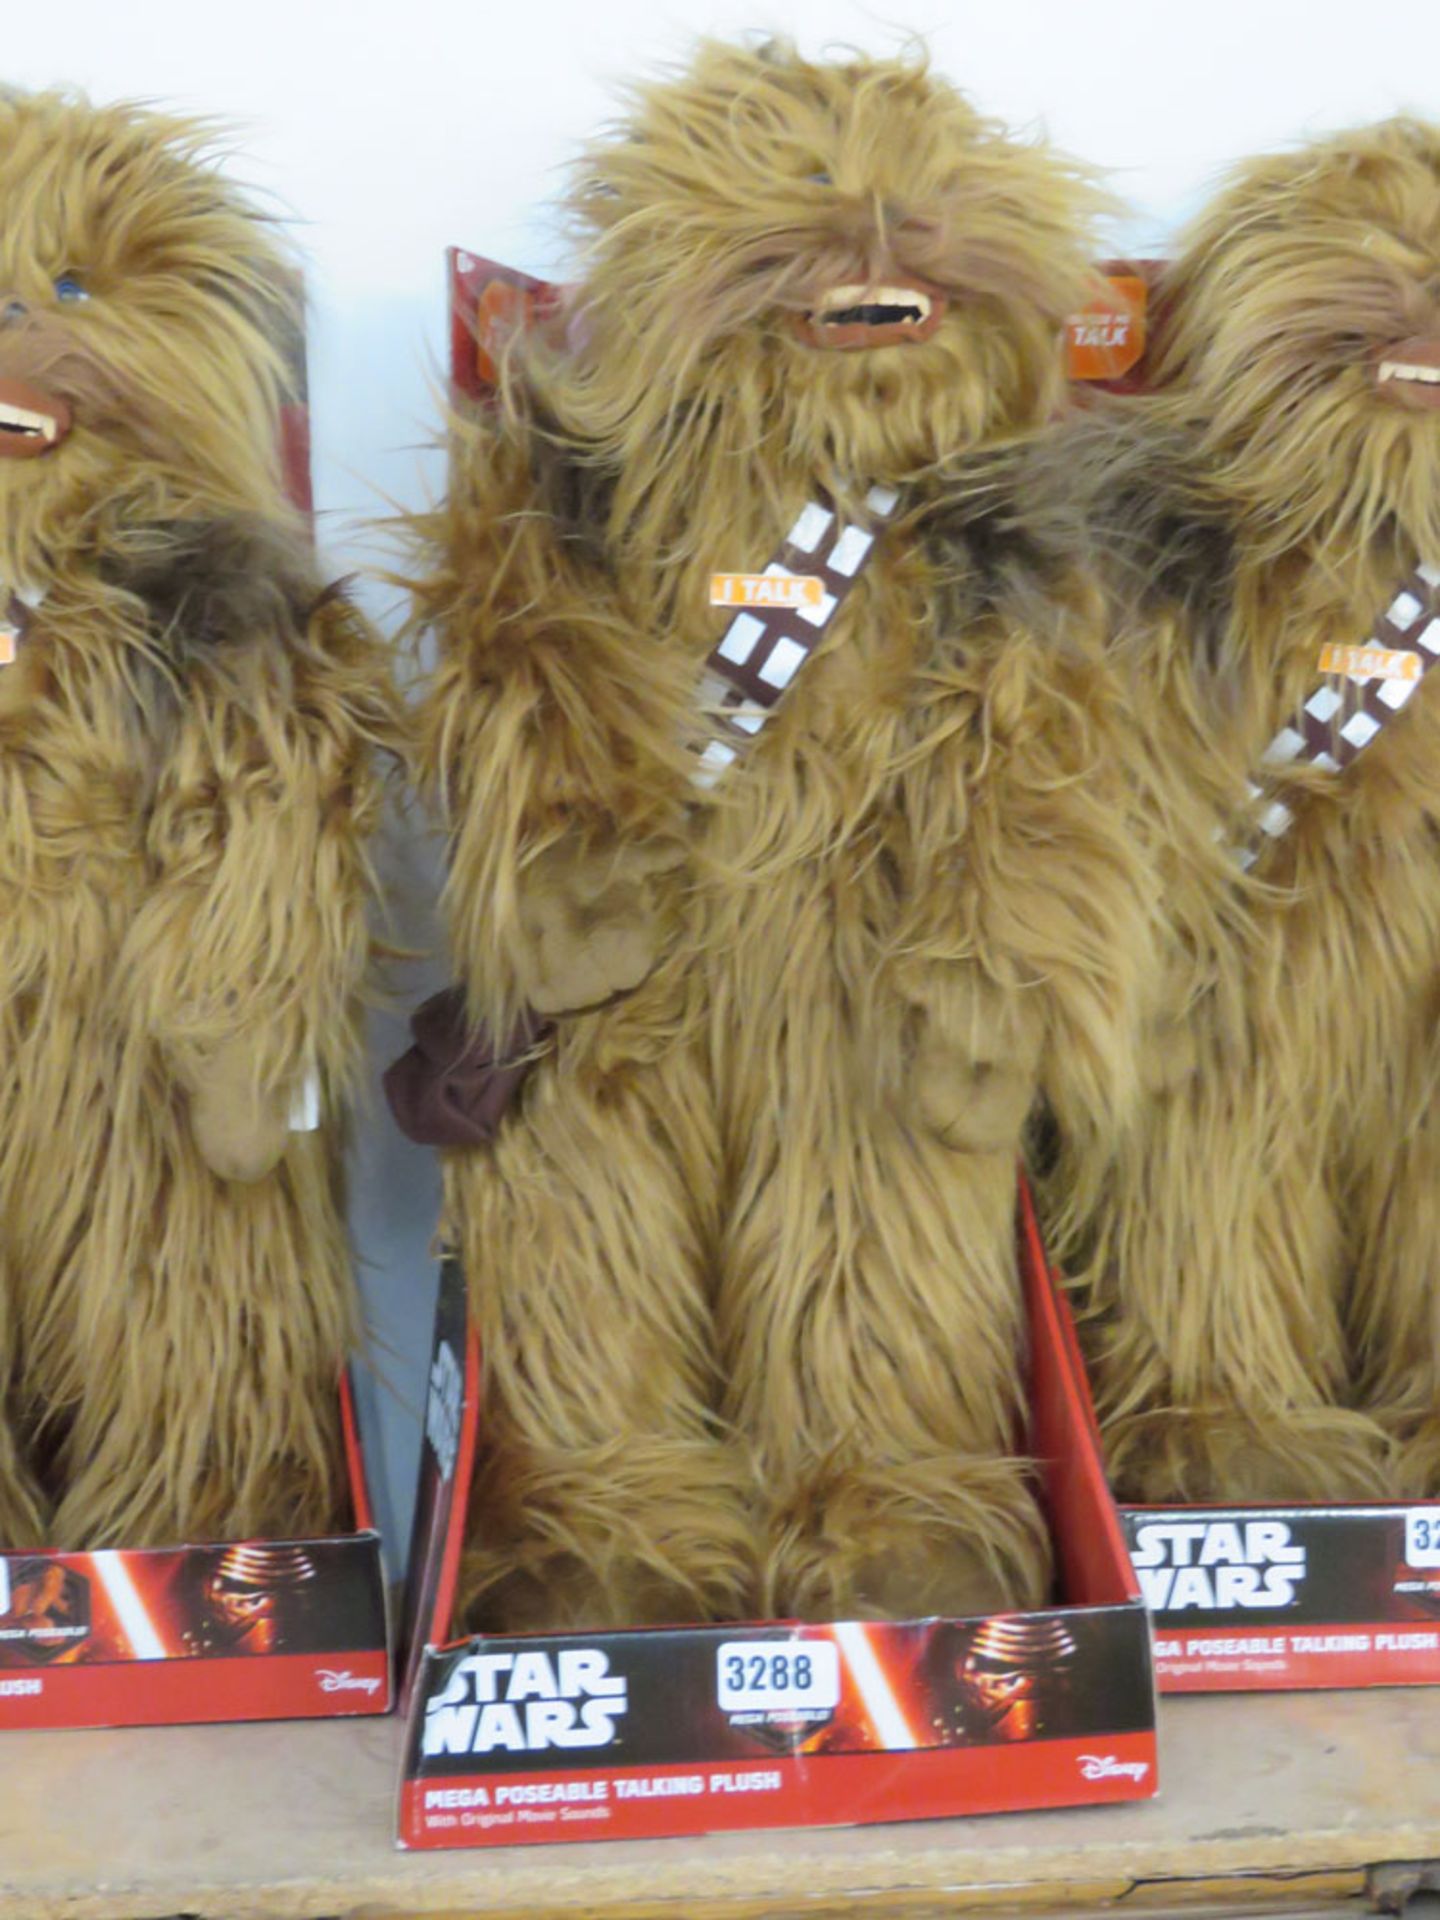 Star Wars mega posable chewbacca talking plush toy